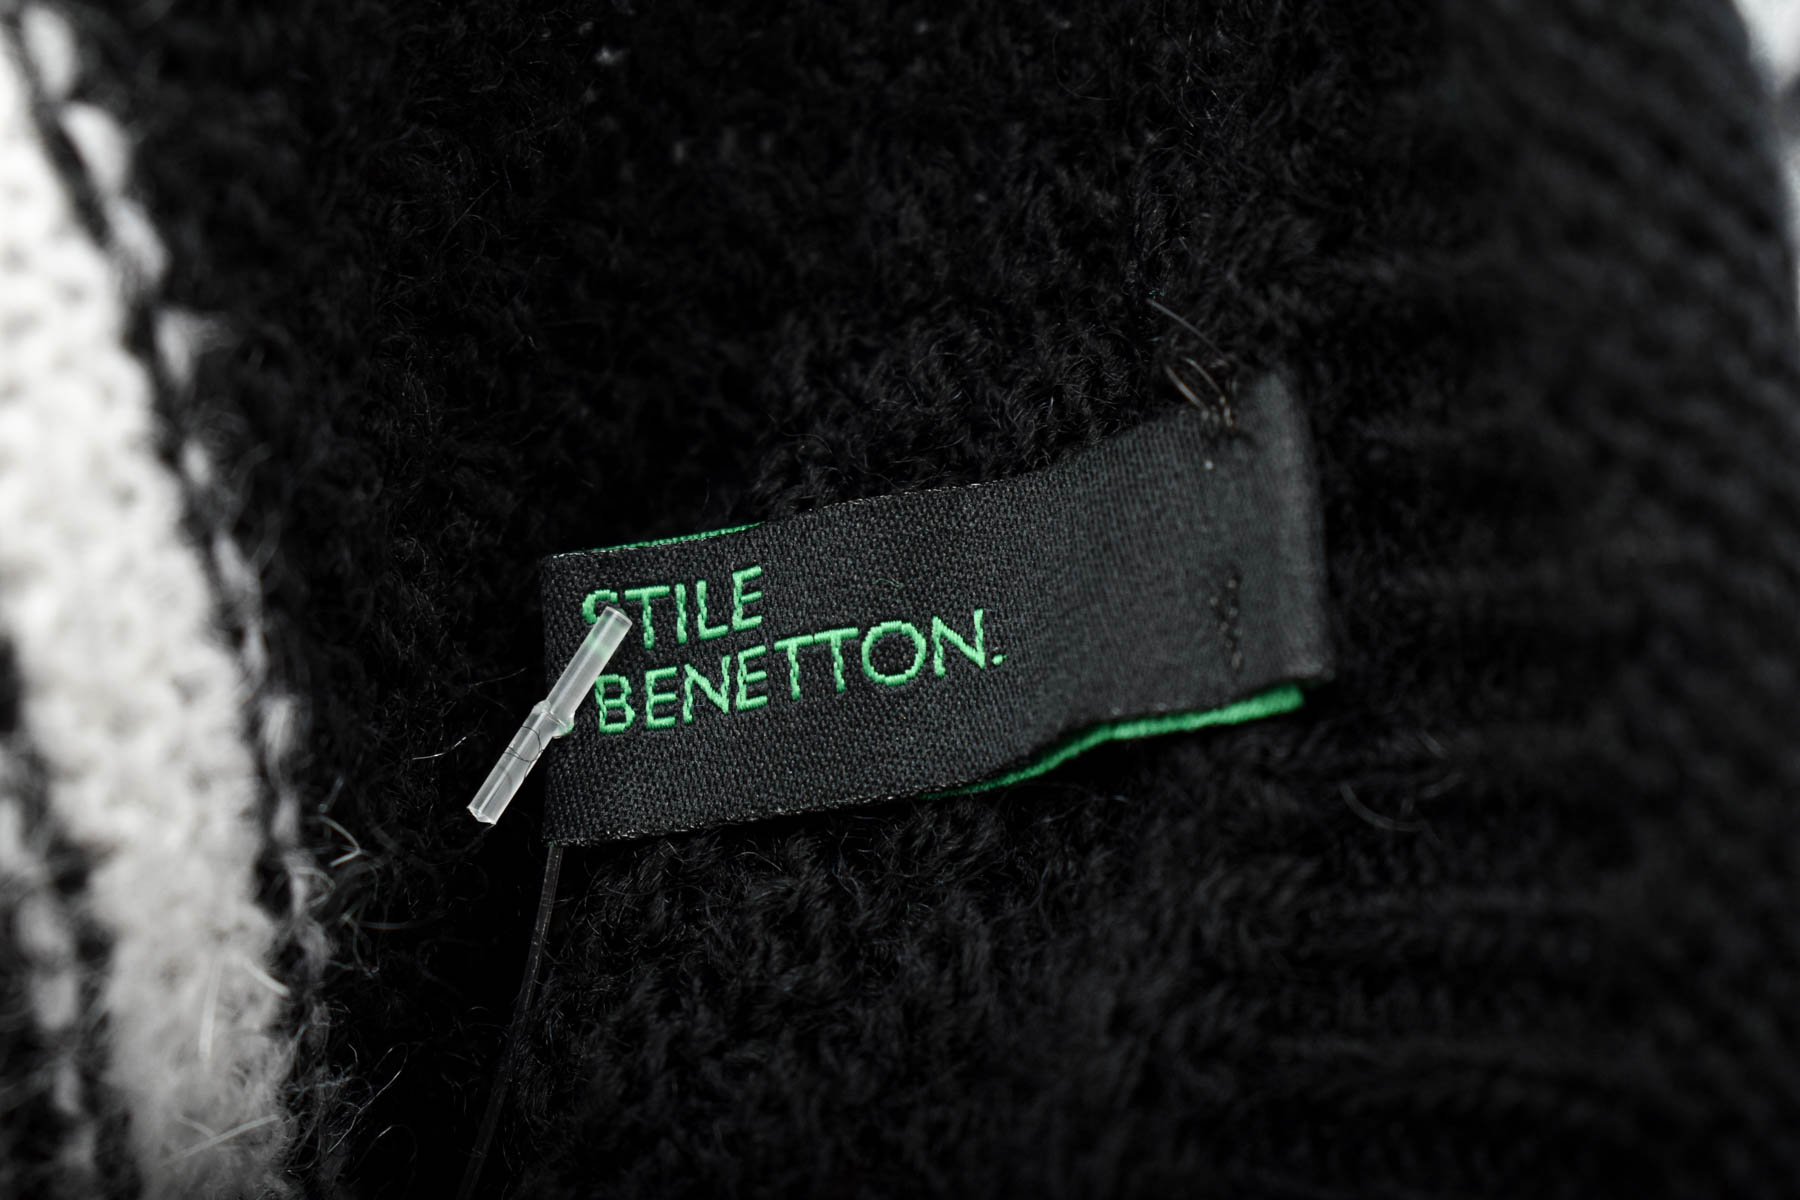 Pulover de damă - Stile Benetton - 2